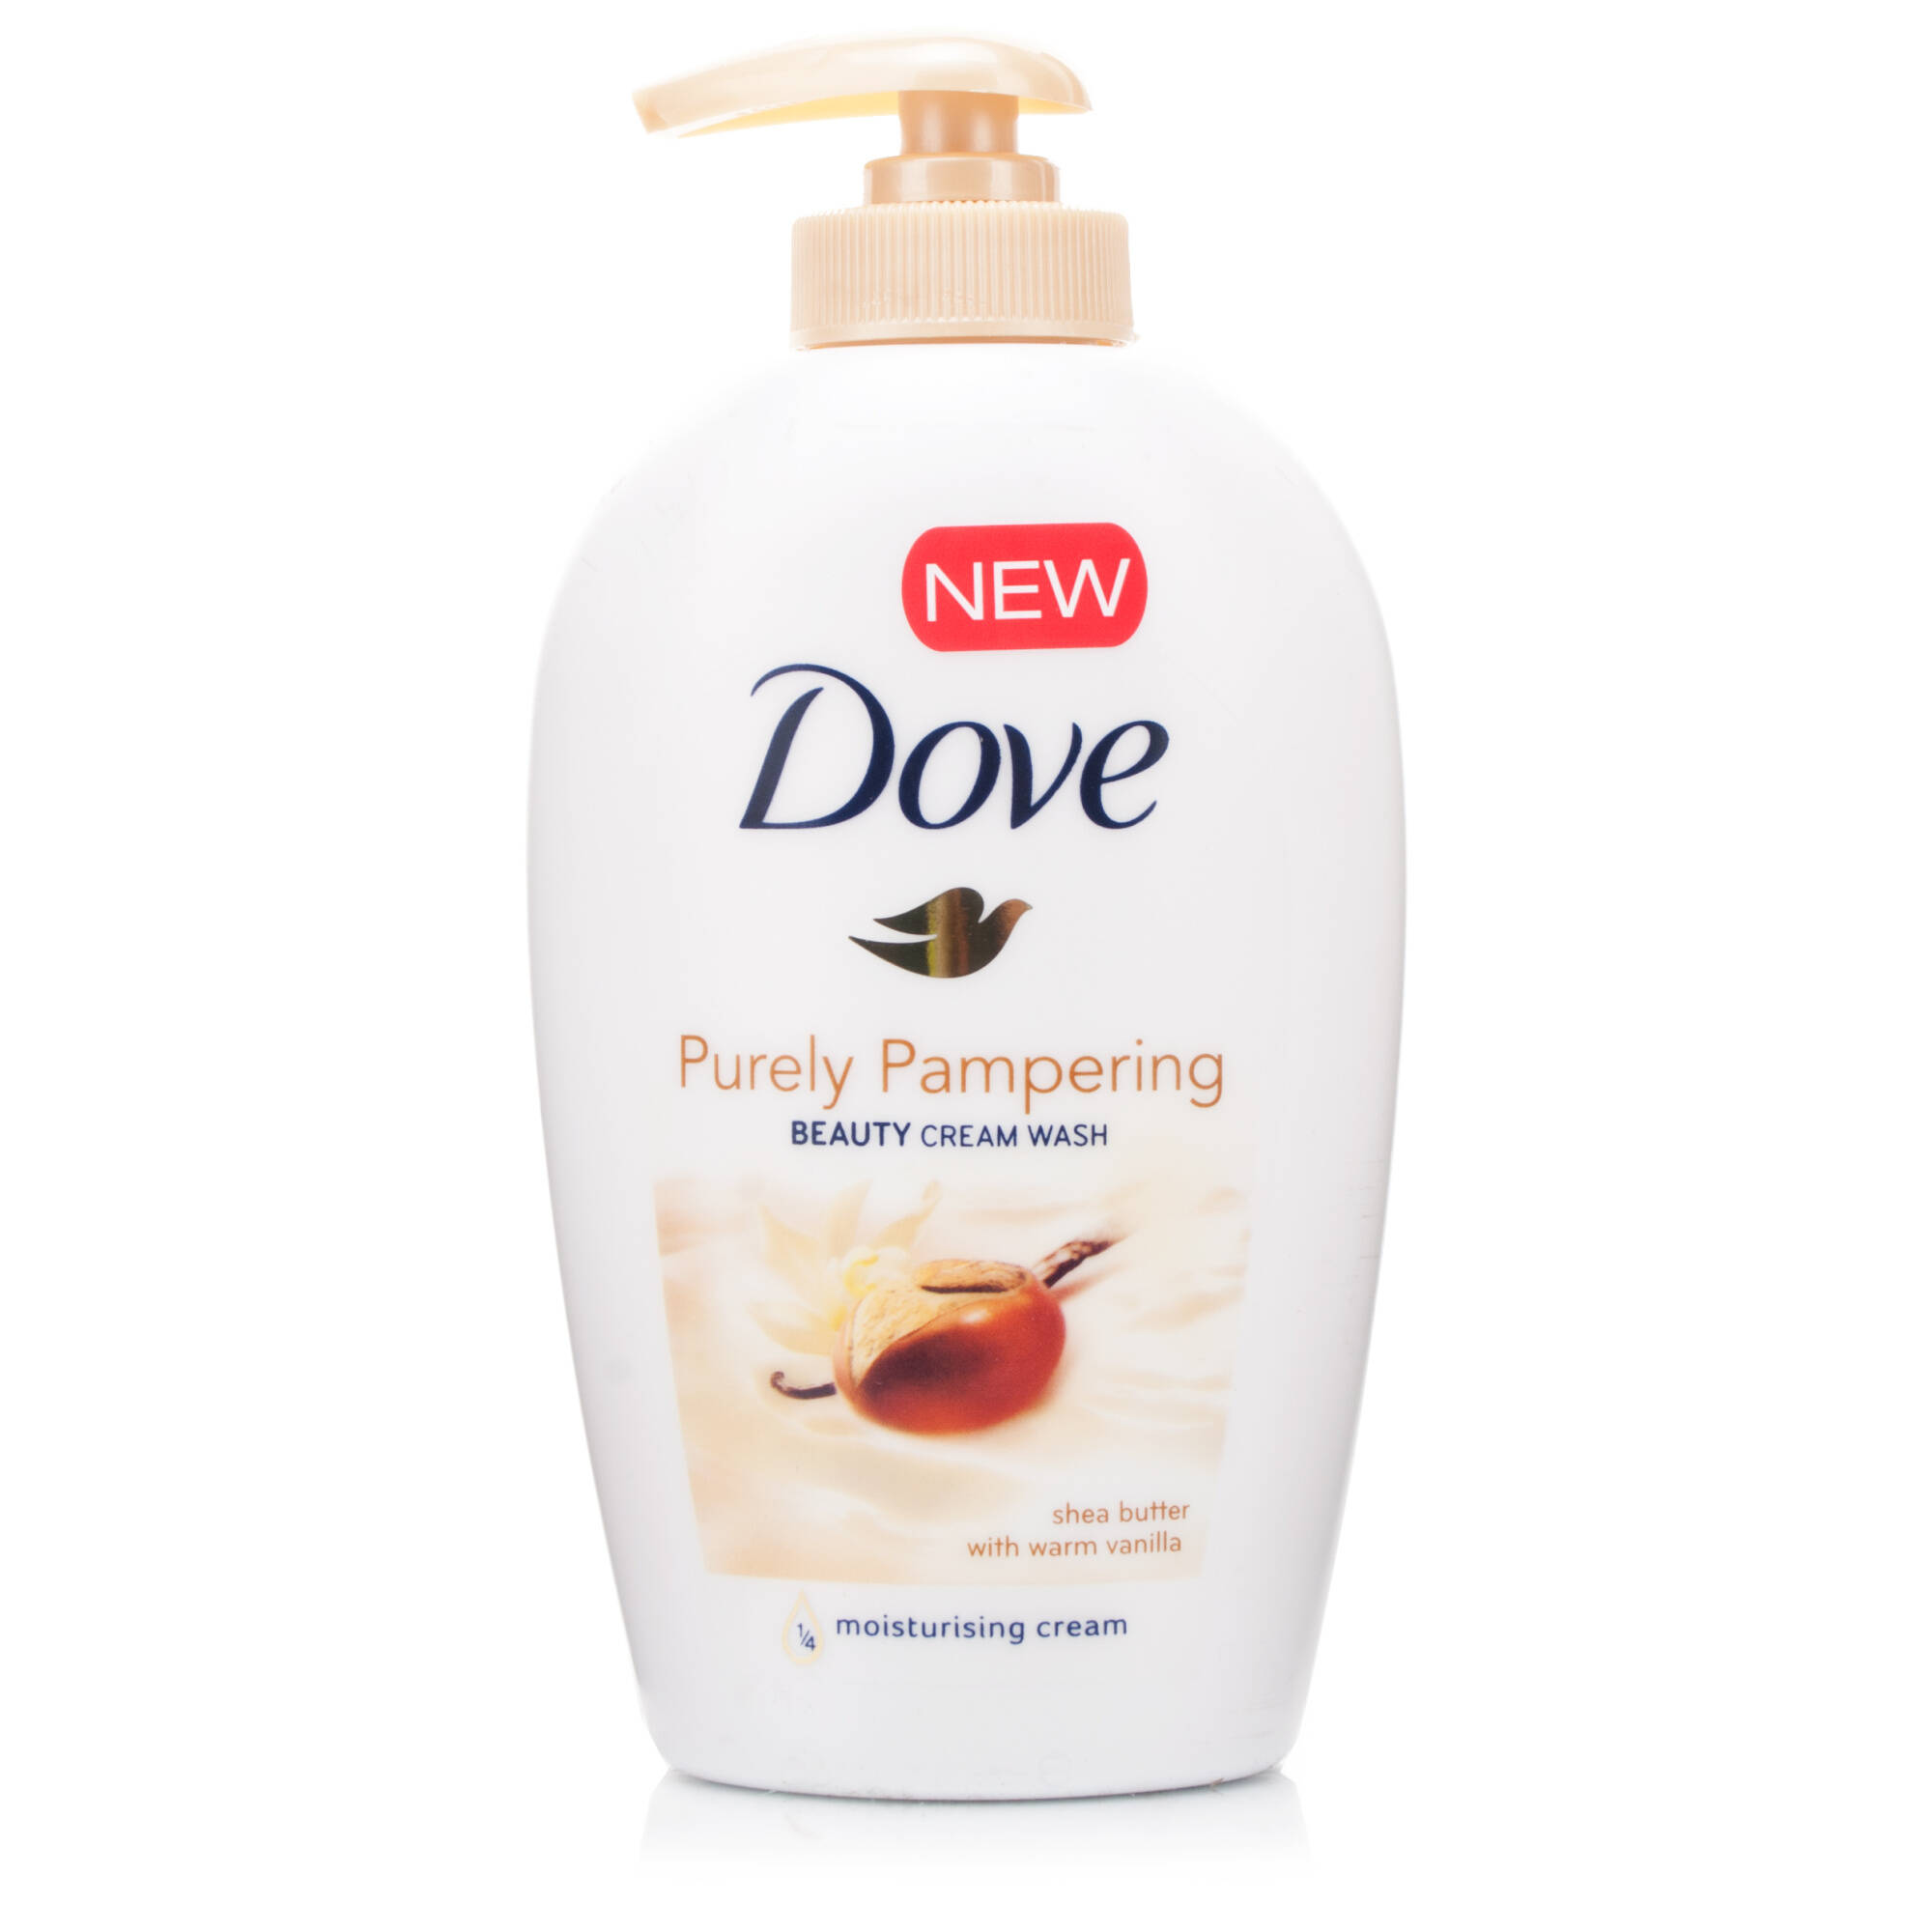 Dove Purely Pampering Beauty Cream Handwash - 250ml